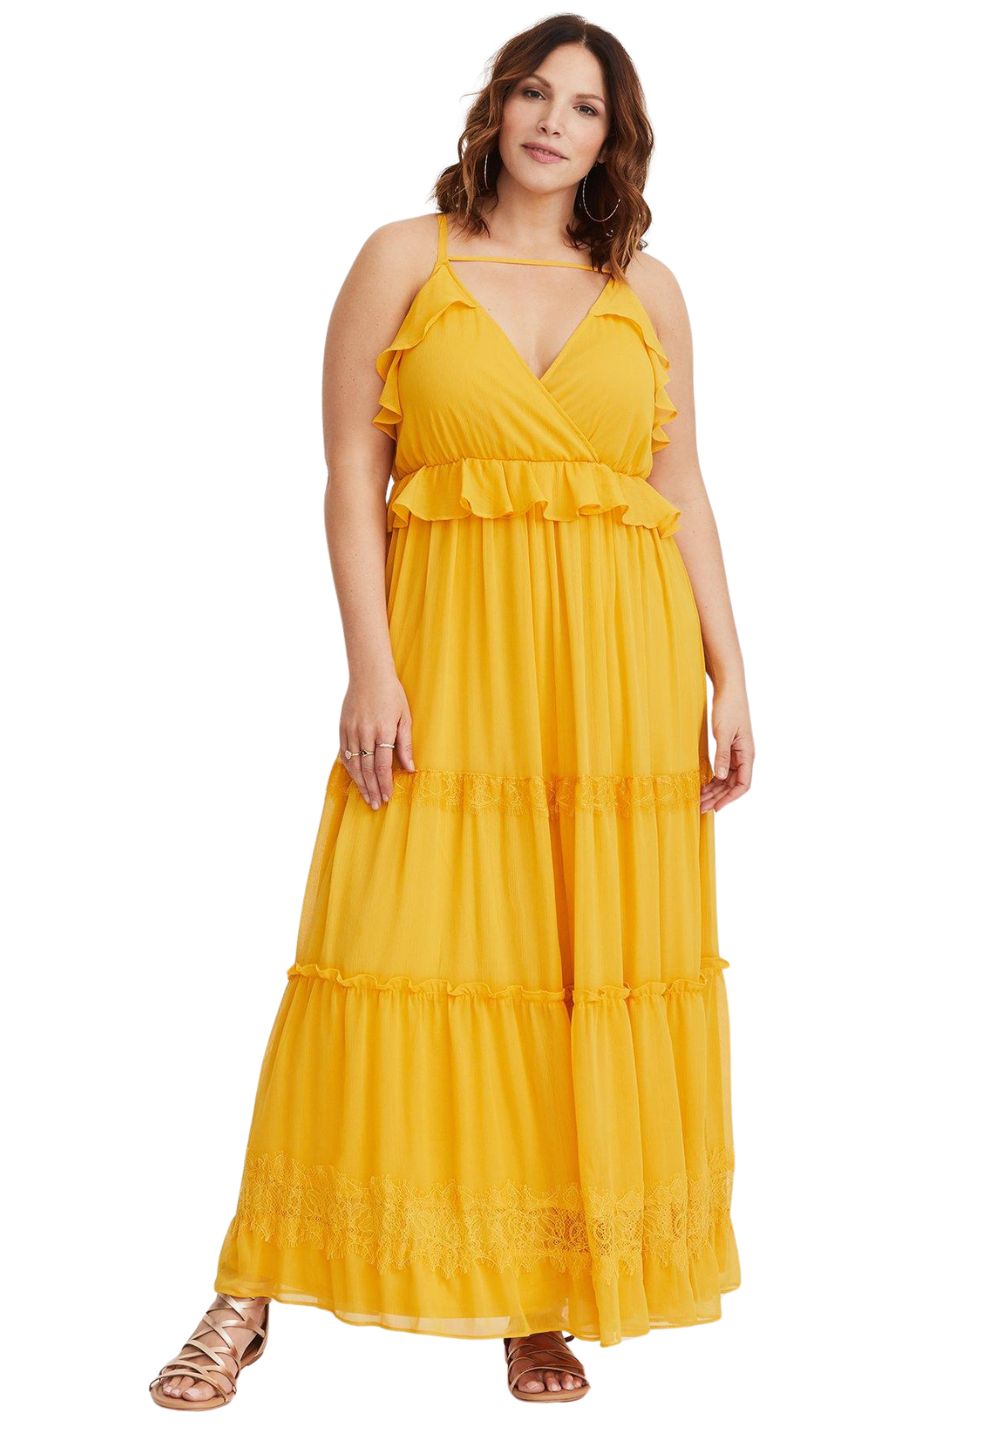 Torrid Yellow Chiffon Maxi Dress, Size 16